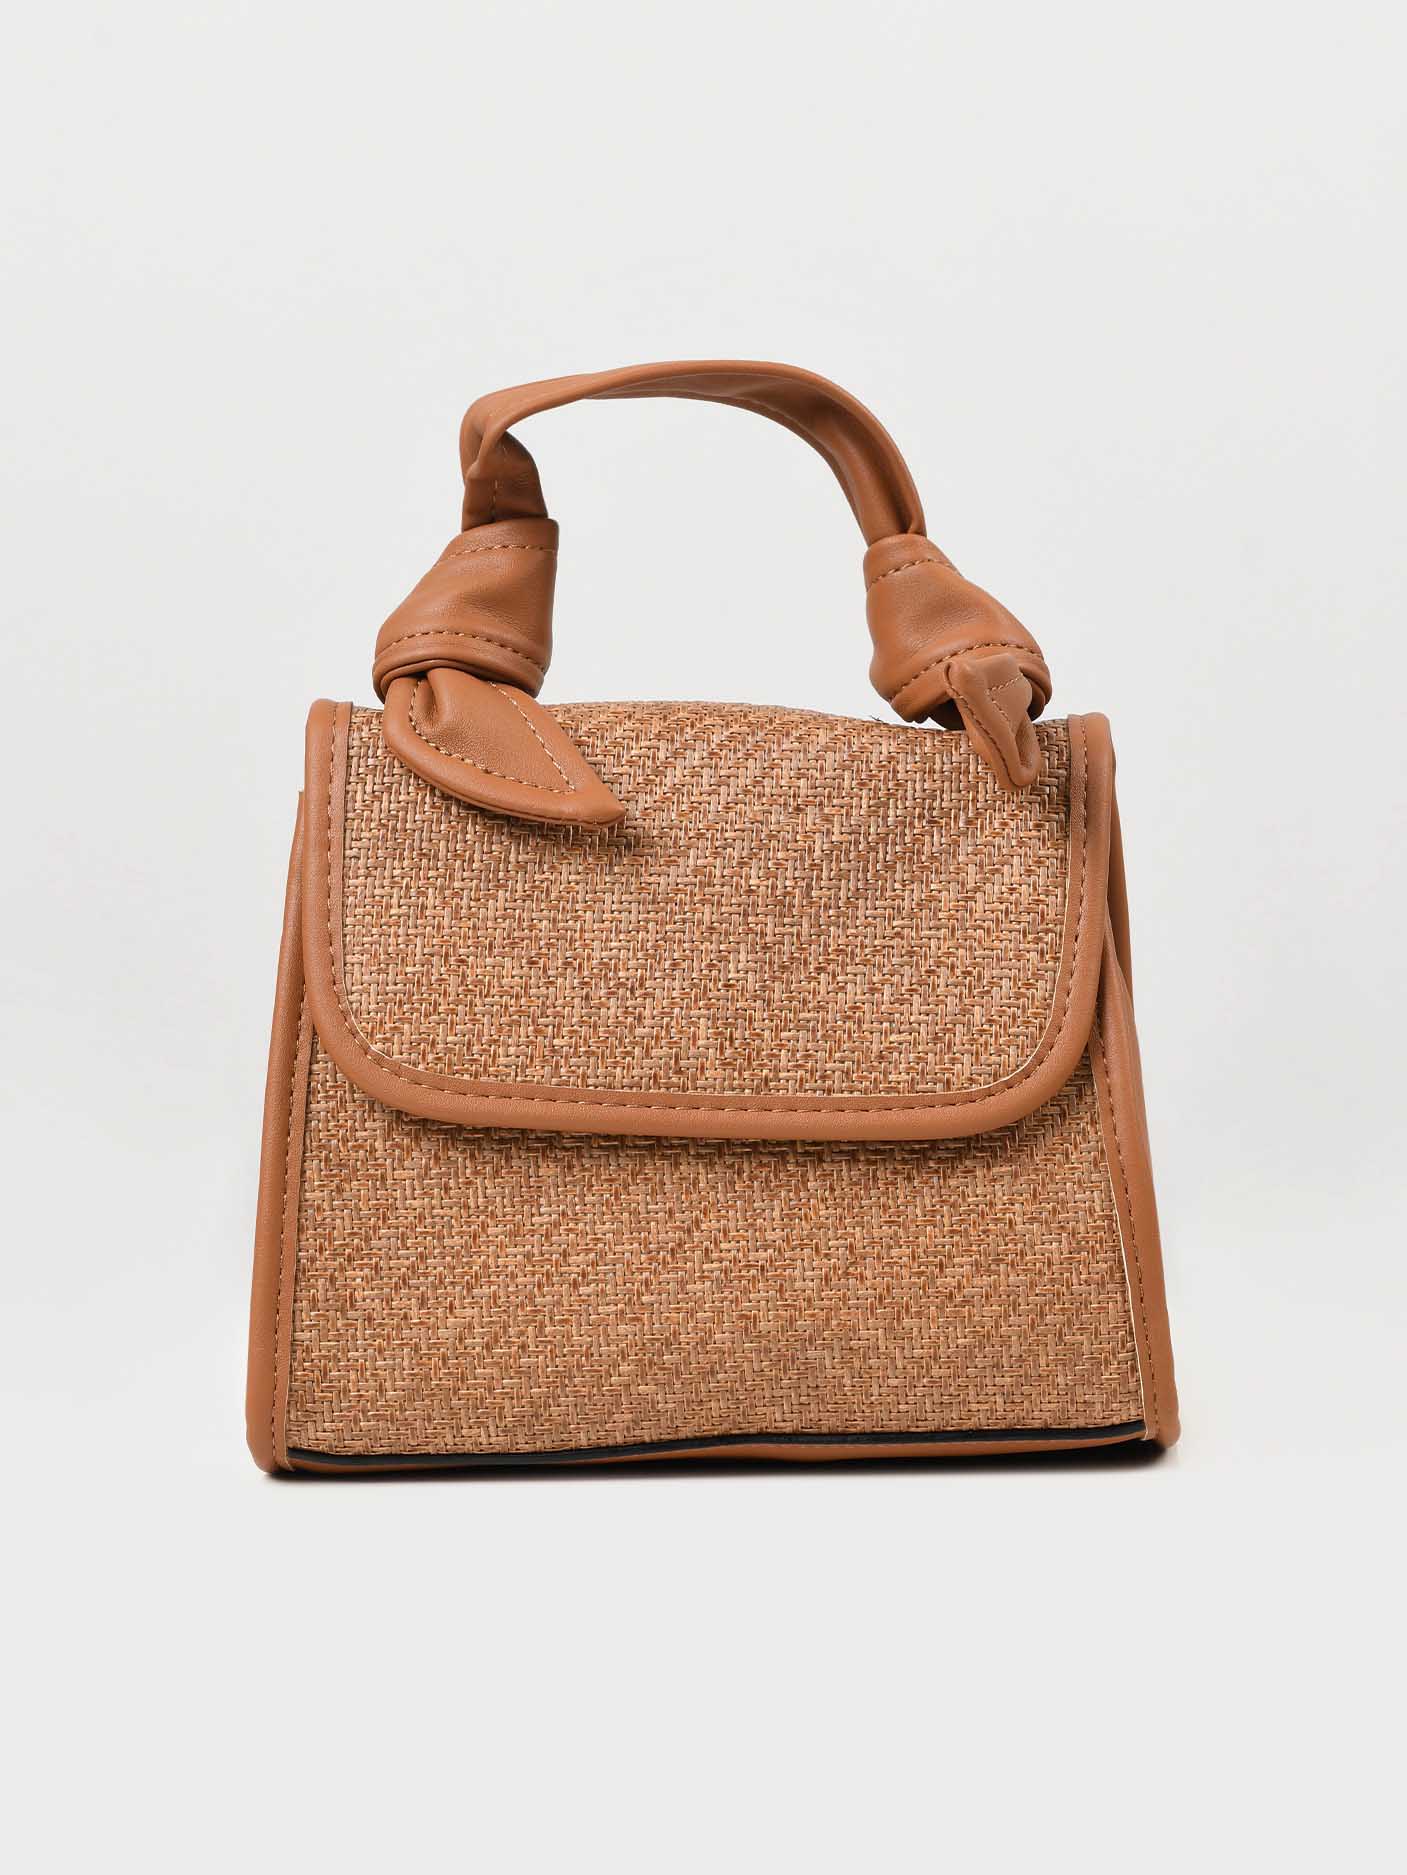 Woven Textured Handbag